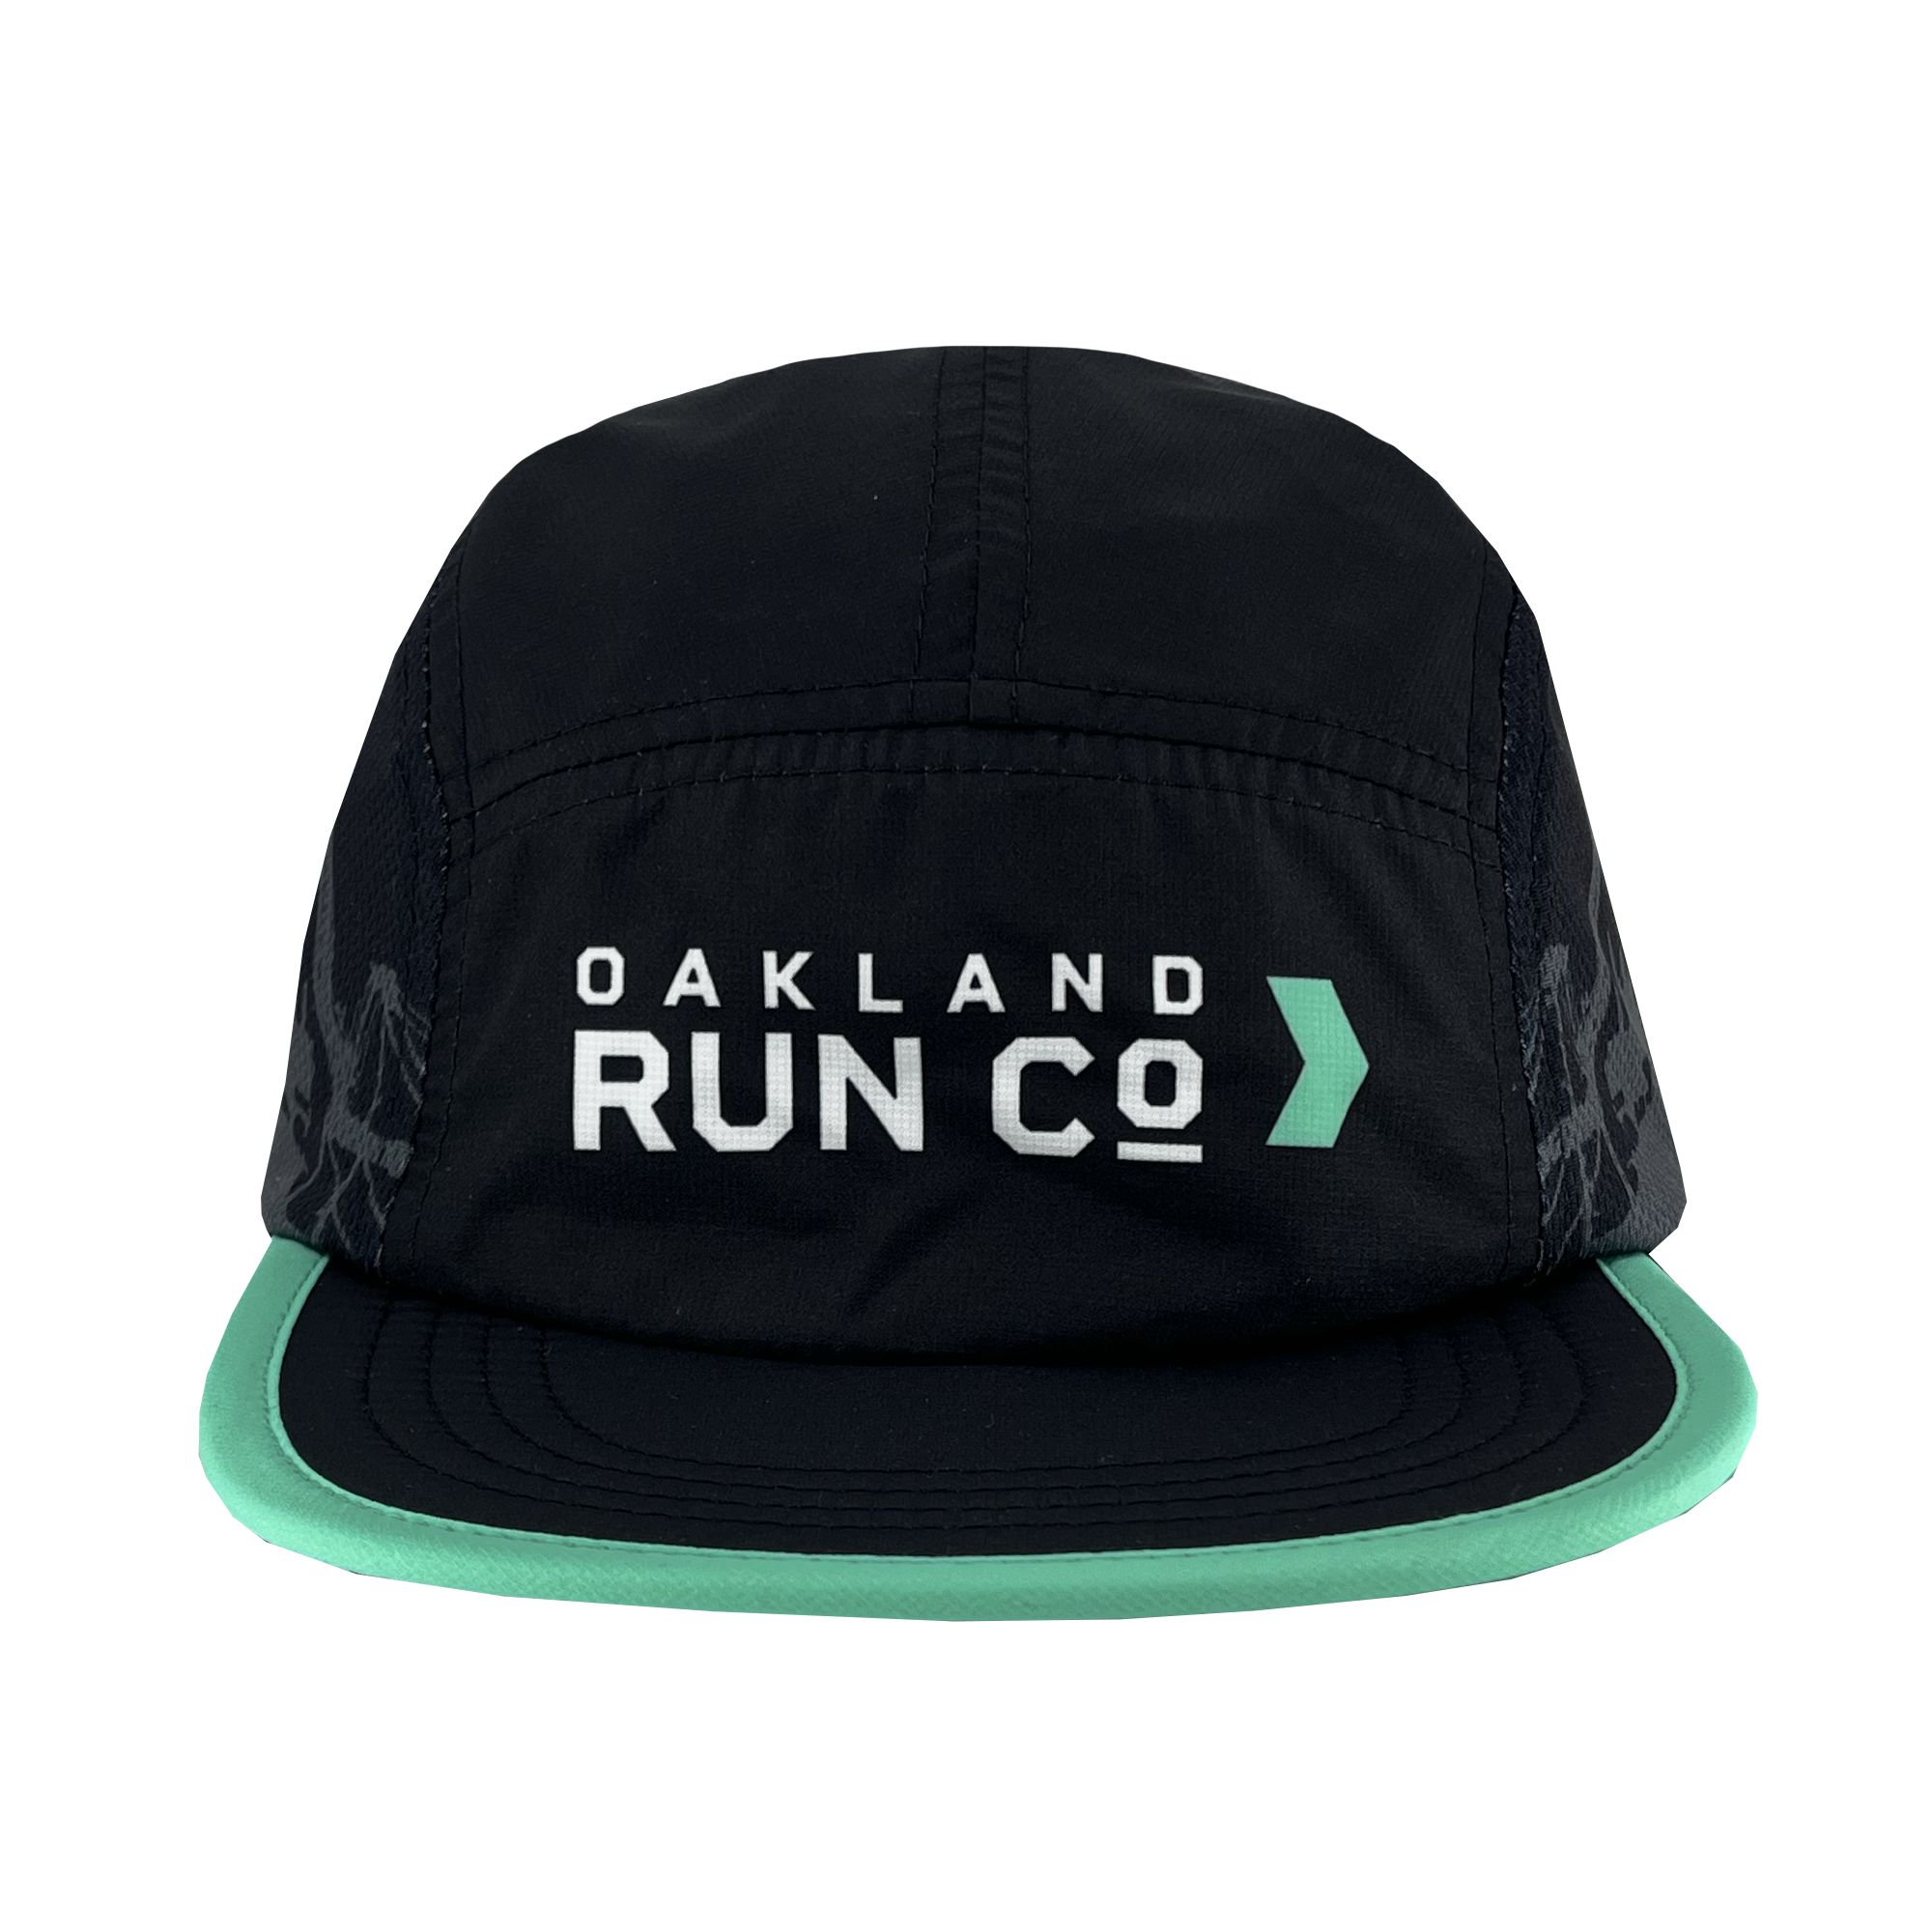 Black mesh running cap with Oakland Run Co wordmark logo and green trim on bill.